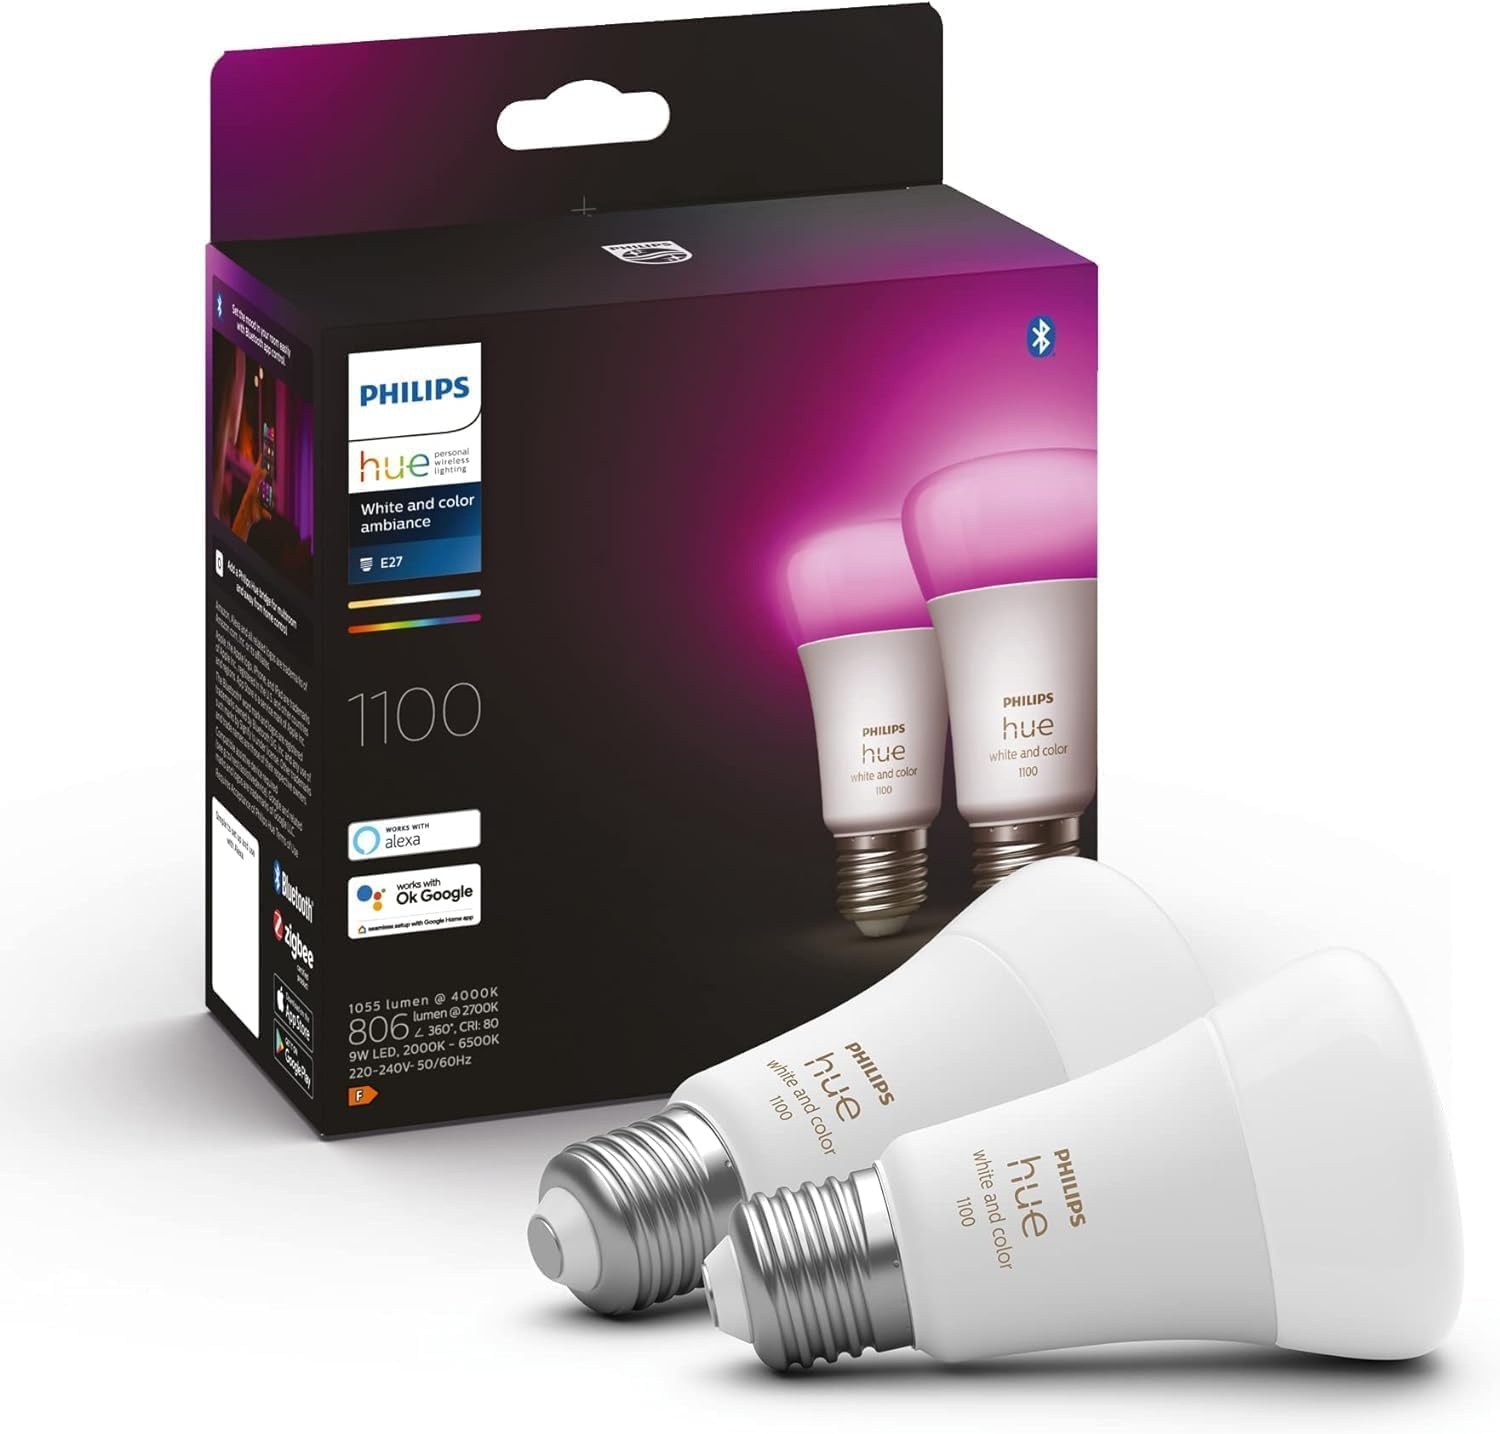 Philips Hue White & Color Ambiance E27 LED Lampen 2-er Pack (1100), TESTSIEGER Stiftung Warentest (01/2024), dimmbare LED Lampen mit 16 Mio. Farben, smarte Lichtsteuerung über Sprache und App